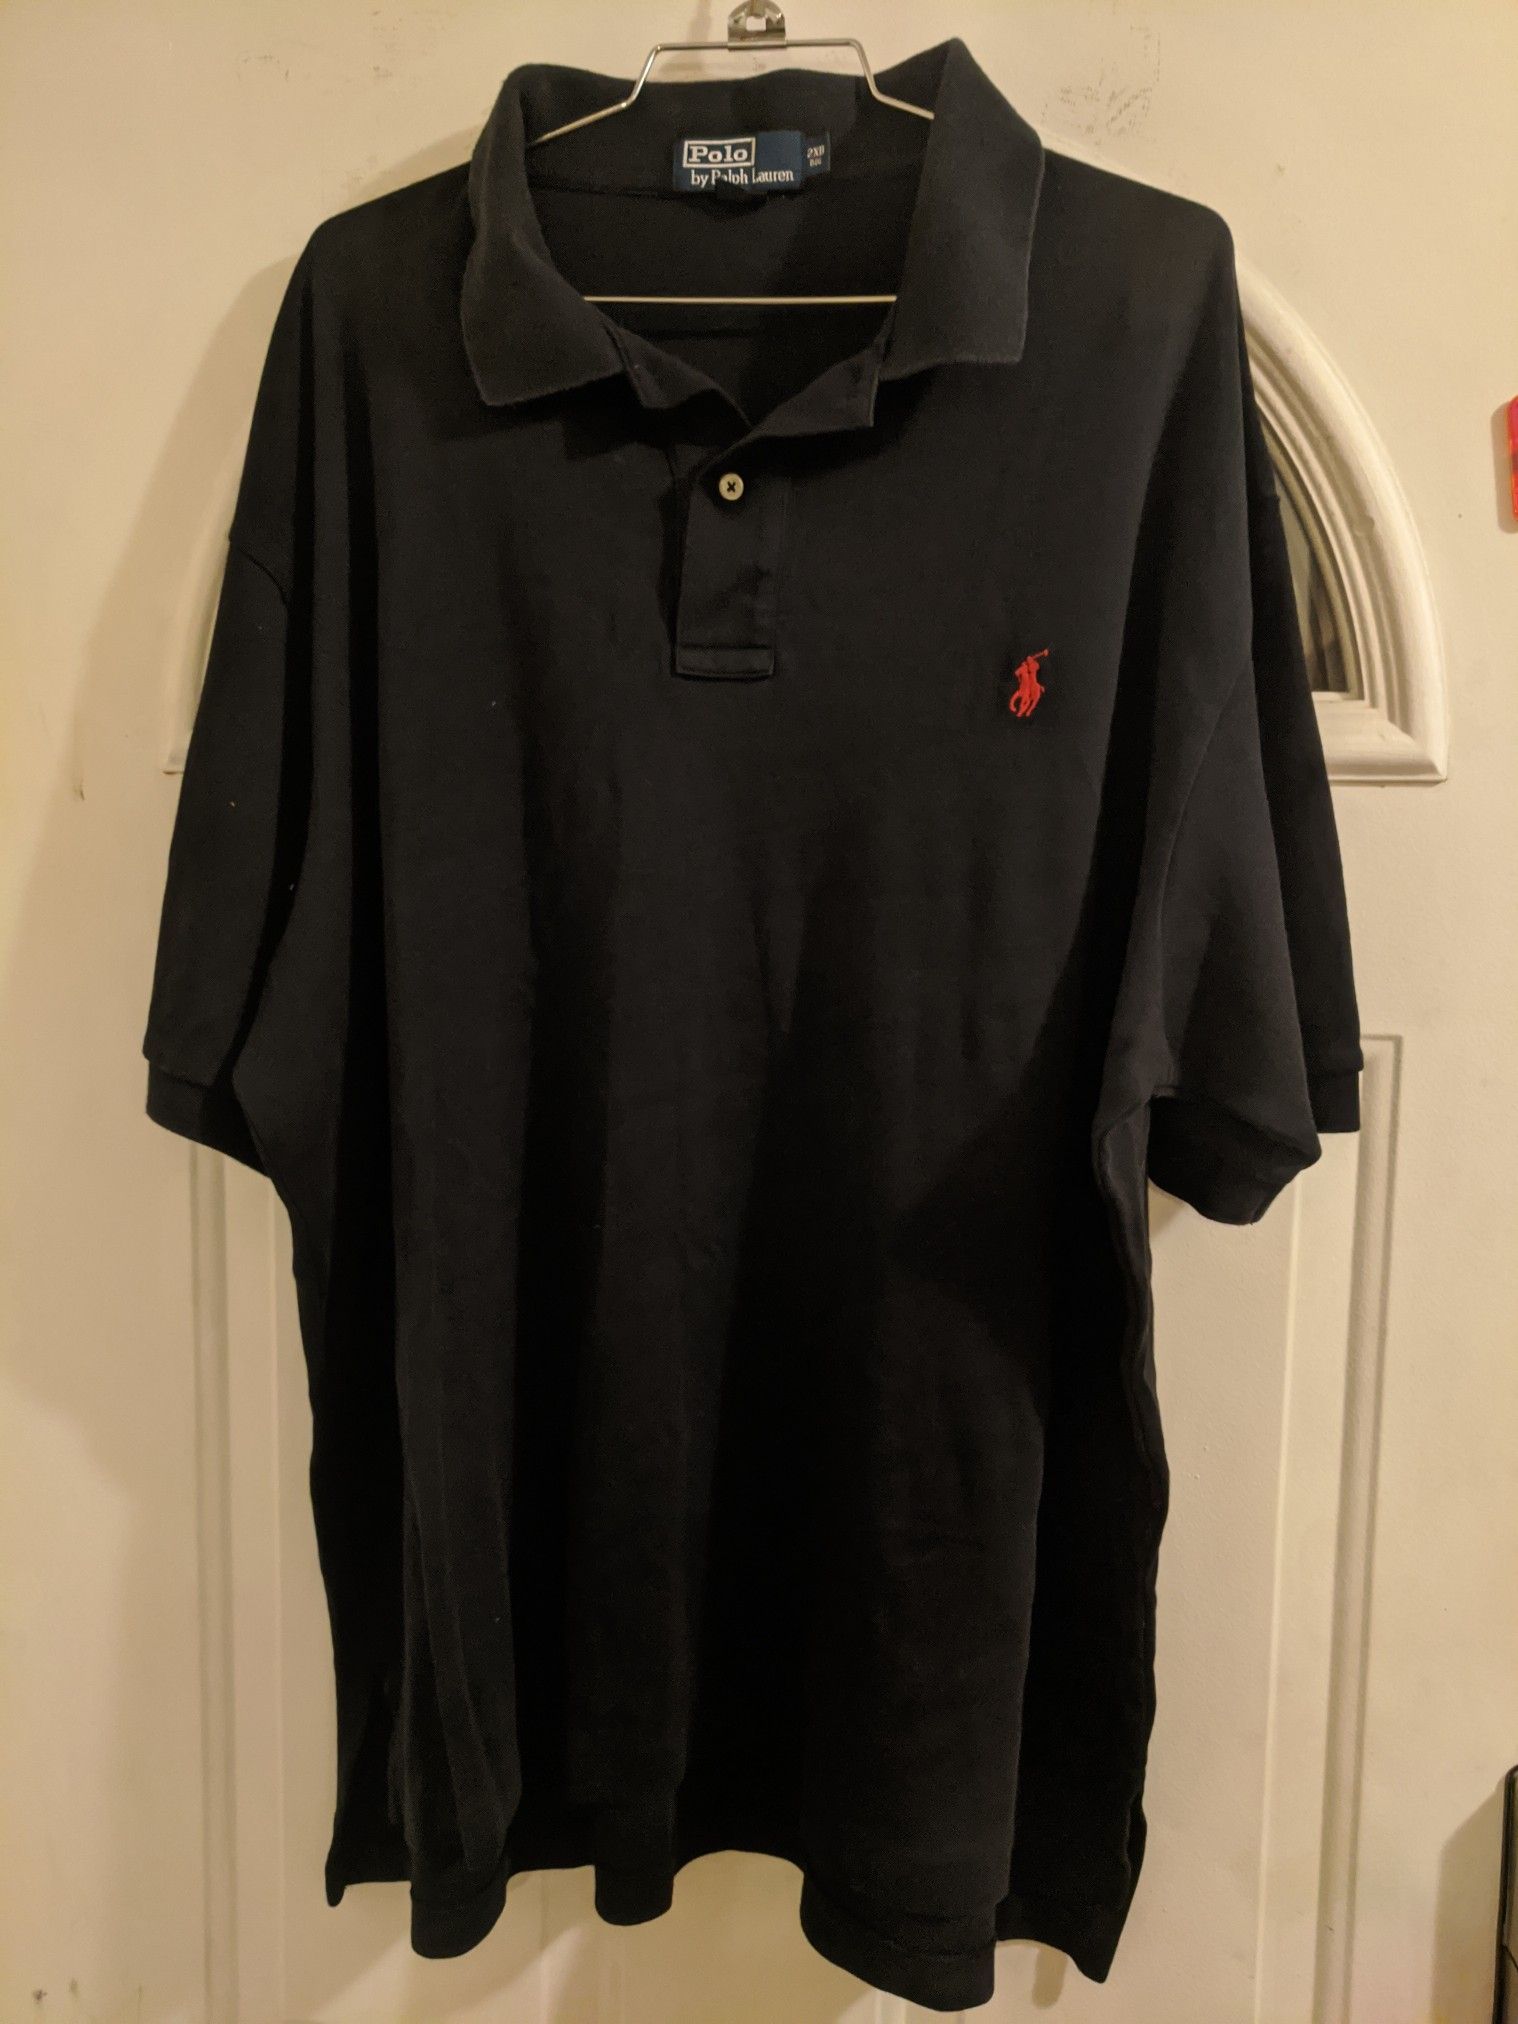 Men's Ralph Lauren Shirt Size Tallx2 New No Tags Black Color